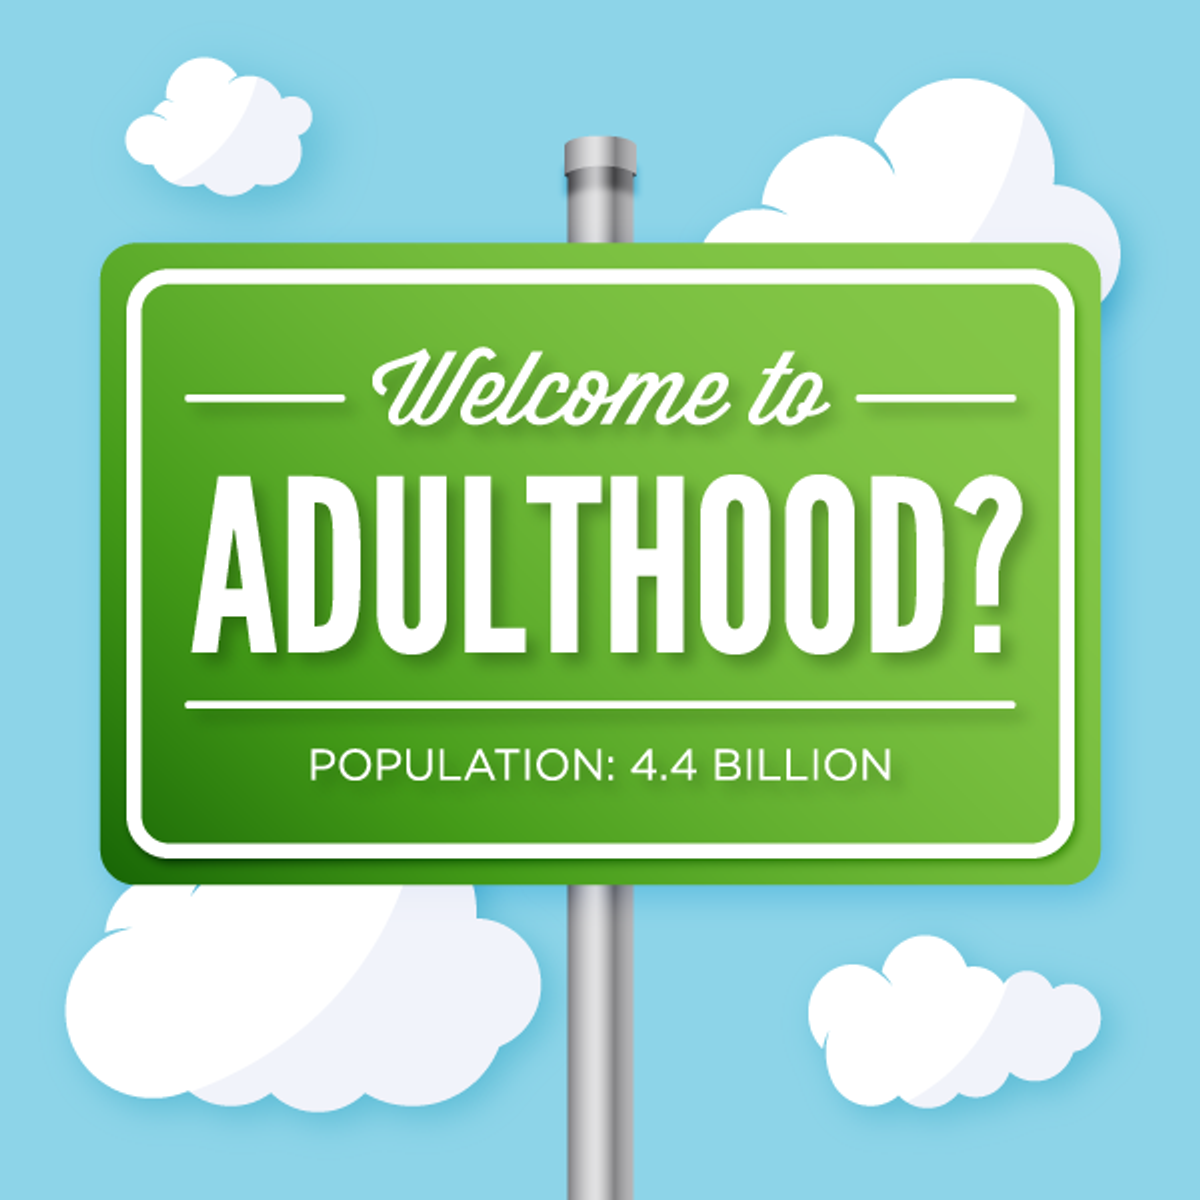 6 Steps Towards Adulthood